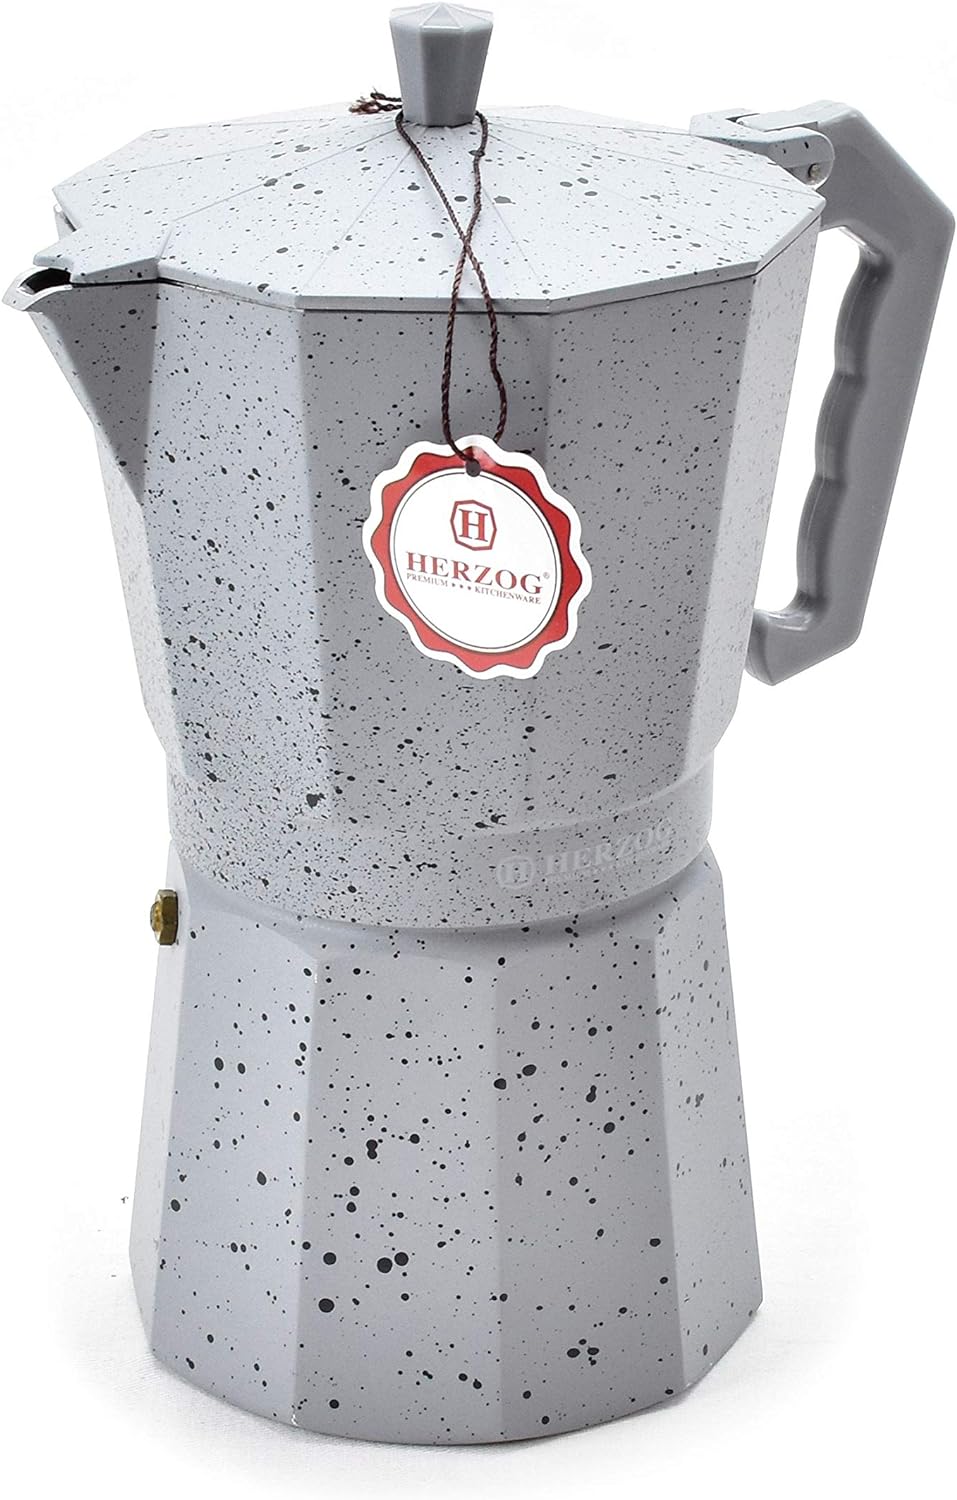 Herzog® Premium Espresso Maker, Coffee Maker, Mocha Cooker, 6-12 Cups (6 Cups, Gray)